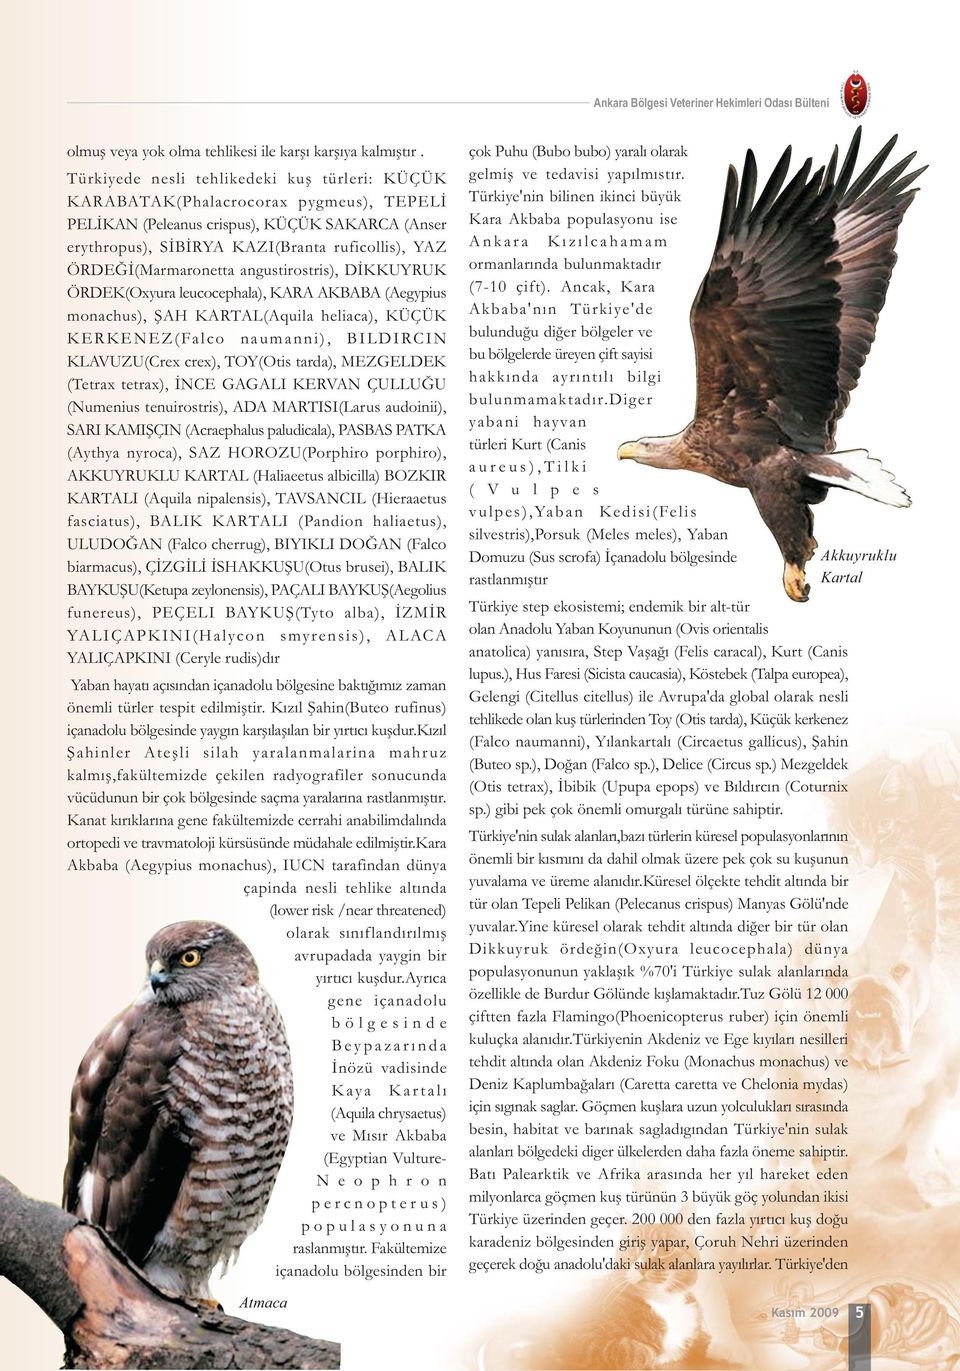 ÖRDEÐÝ(Marmaronetta angustirostris), DÝKKUYRUK ÖRDEK(Oxyura leucocephala), KARA AKBABA (Aegypius monachus), ÞAH KARTAL(Aquila heliaca), KÜÇÜK KERKENEZ(Falco naumanni), BILDIRCIN KLAVUZU(Crex crex),